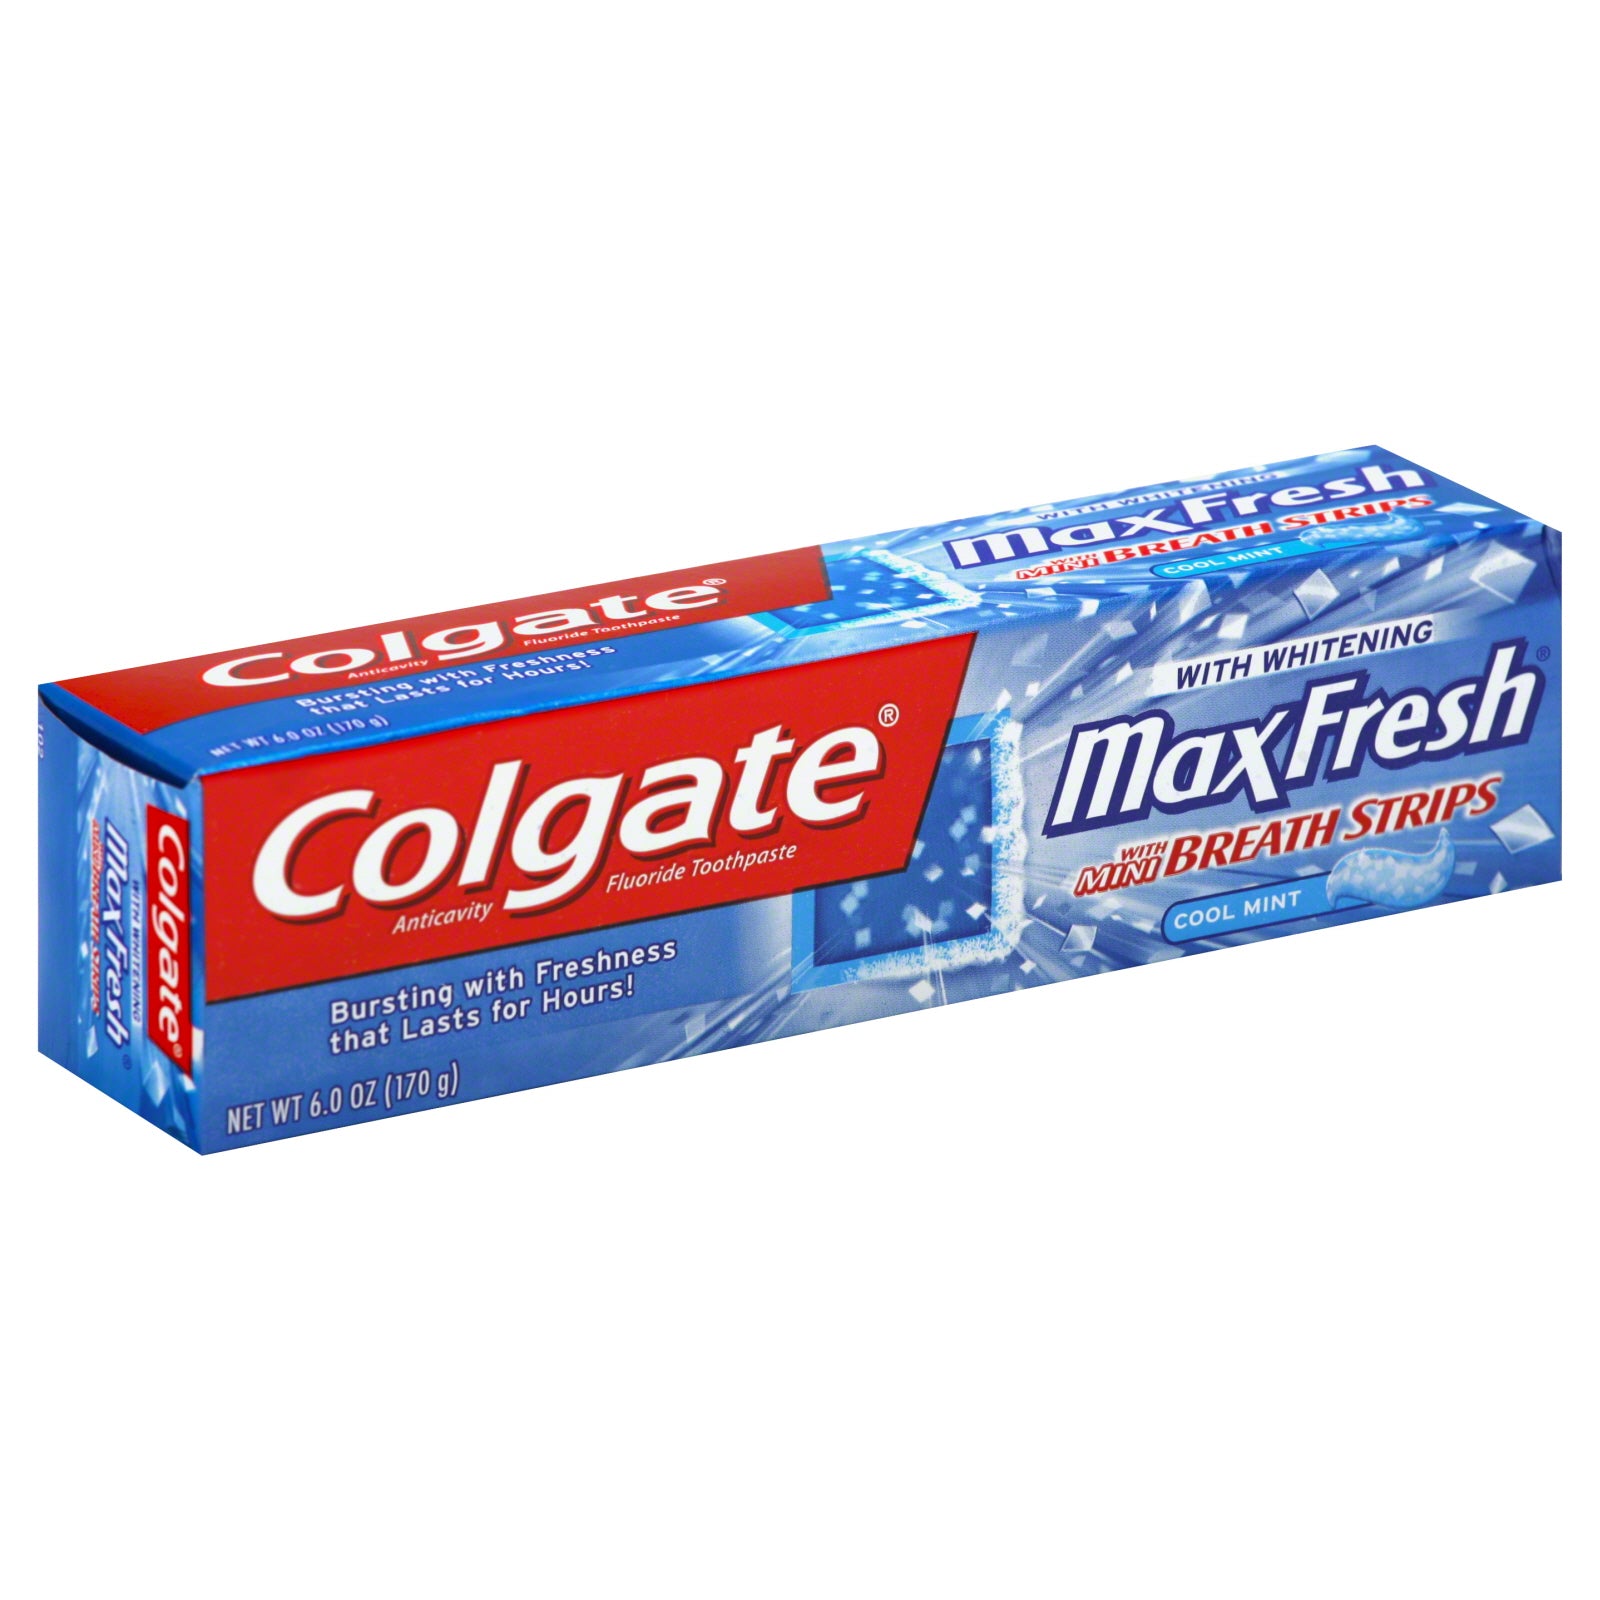 Colgate Max Fresh toothpaste